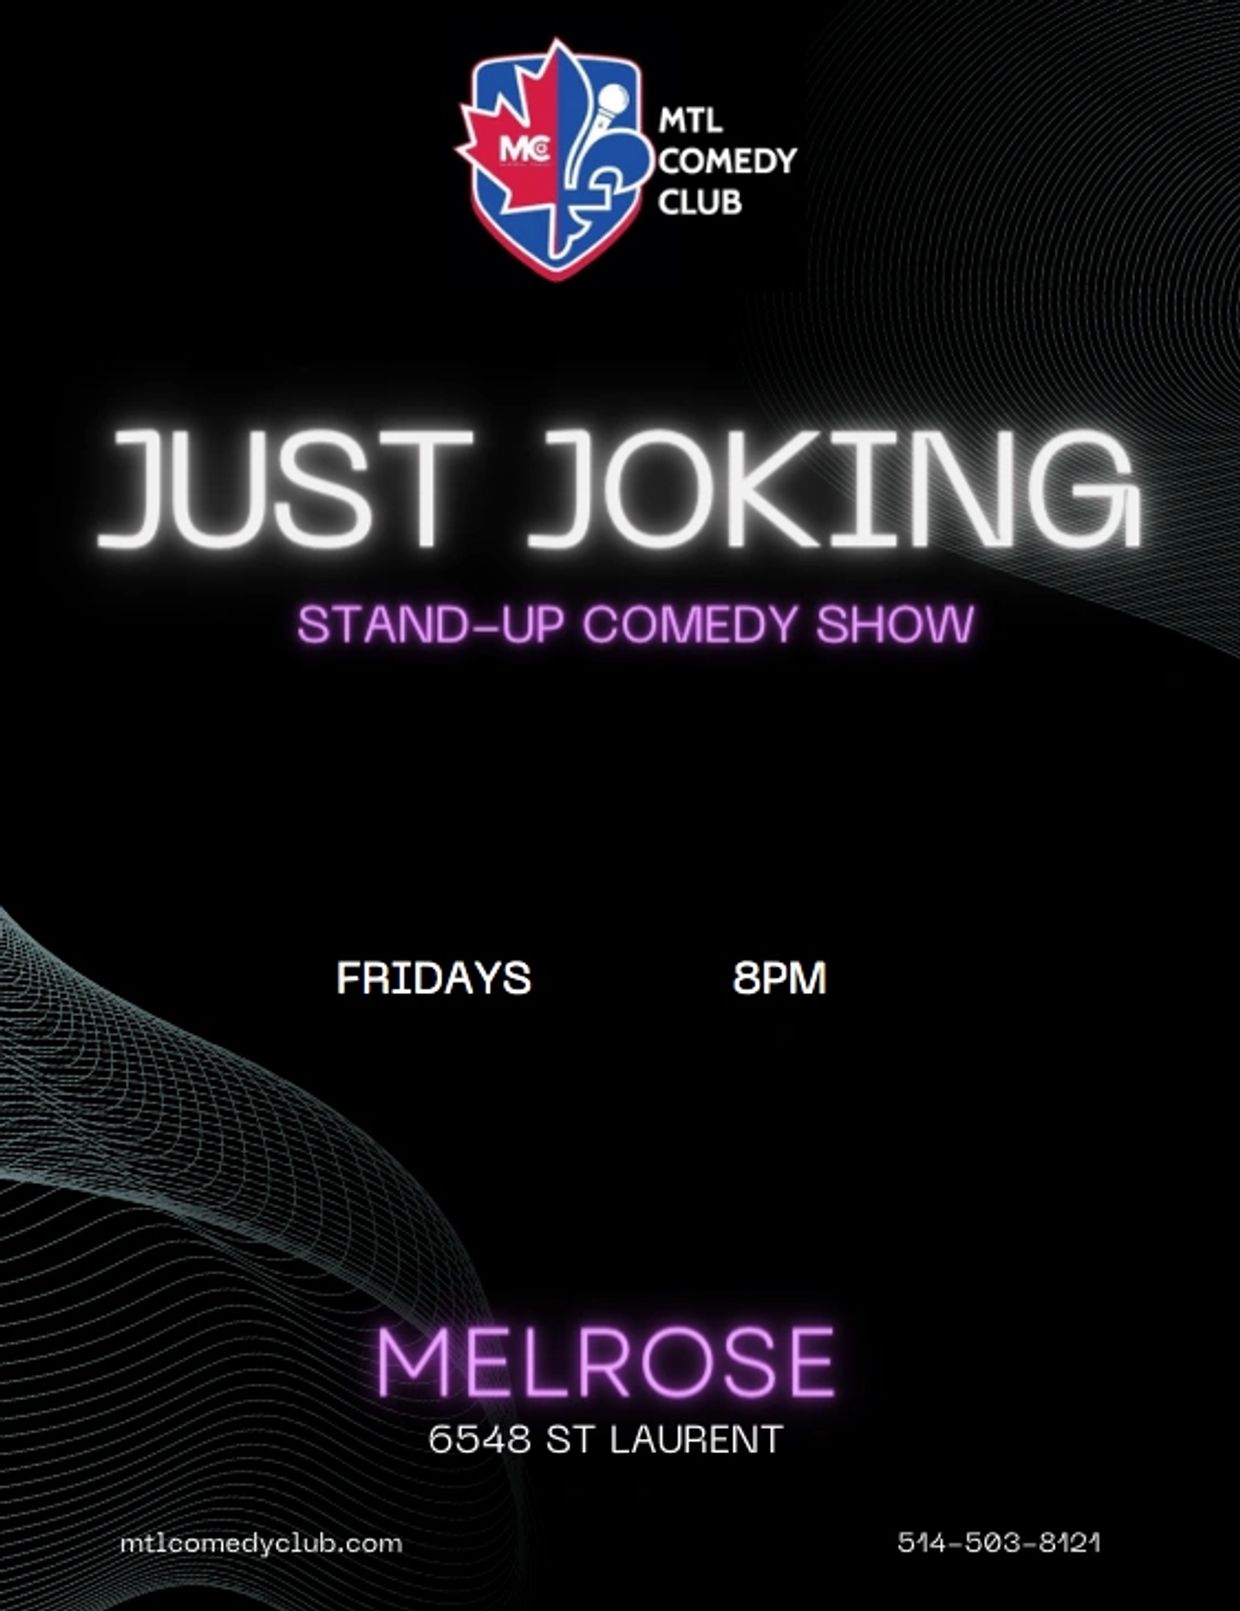 Melrose's comedy bonanza: Get ready to laugh till it hurts!
MONTREALJOKES.COM